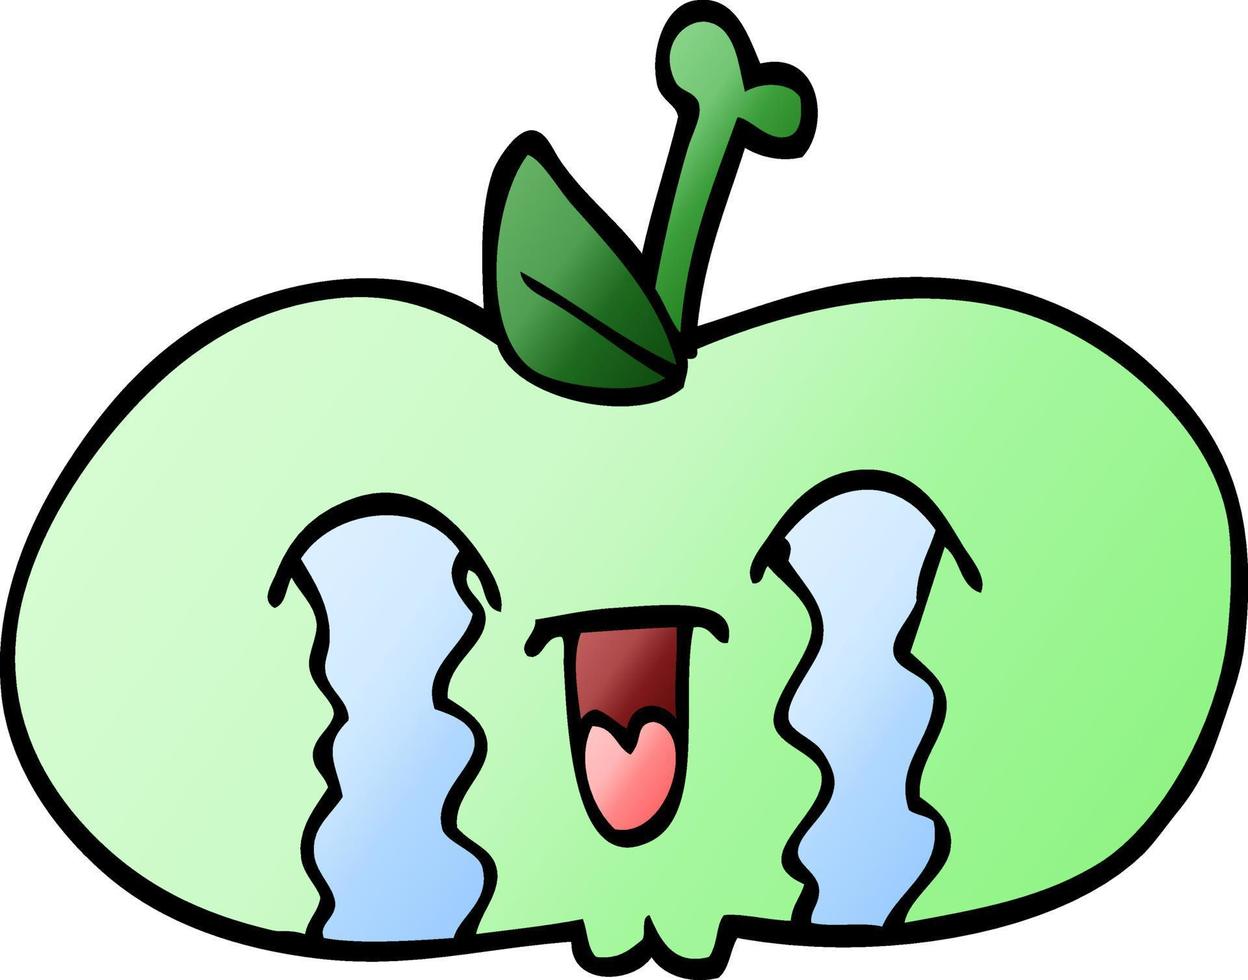 vektor lutning illustration tecknad serie av en ledsen äpple